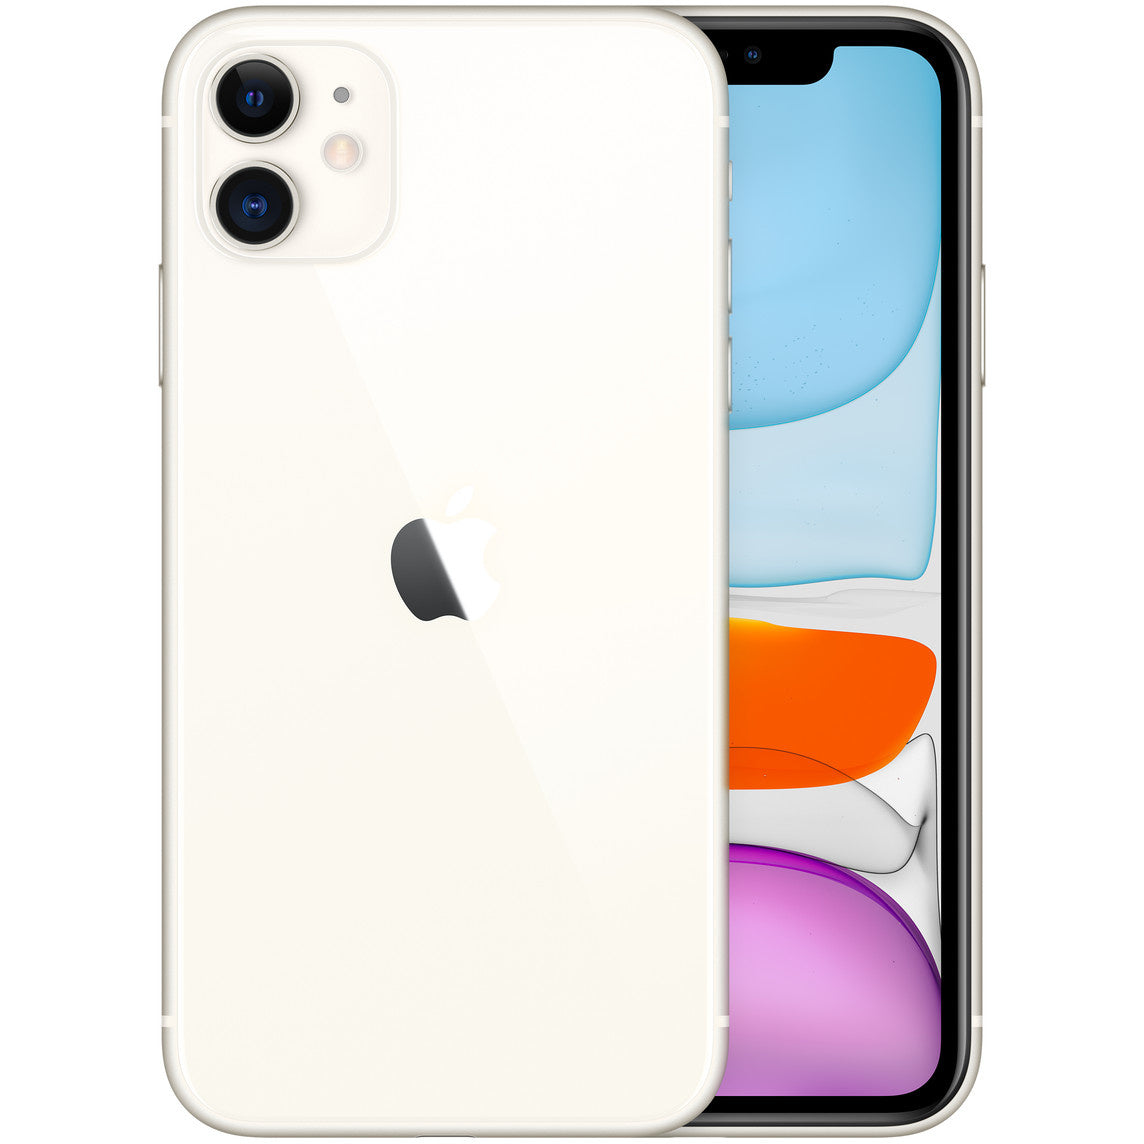 iPhone 11 (White) 64GB - Unlocked